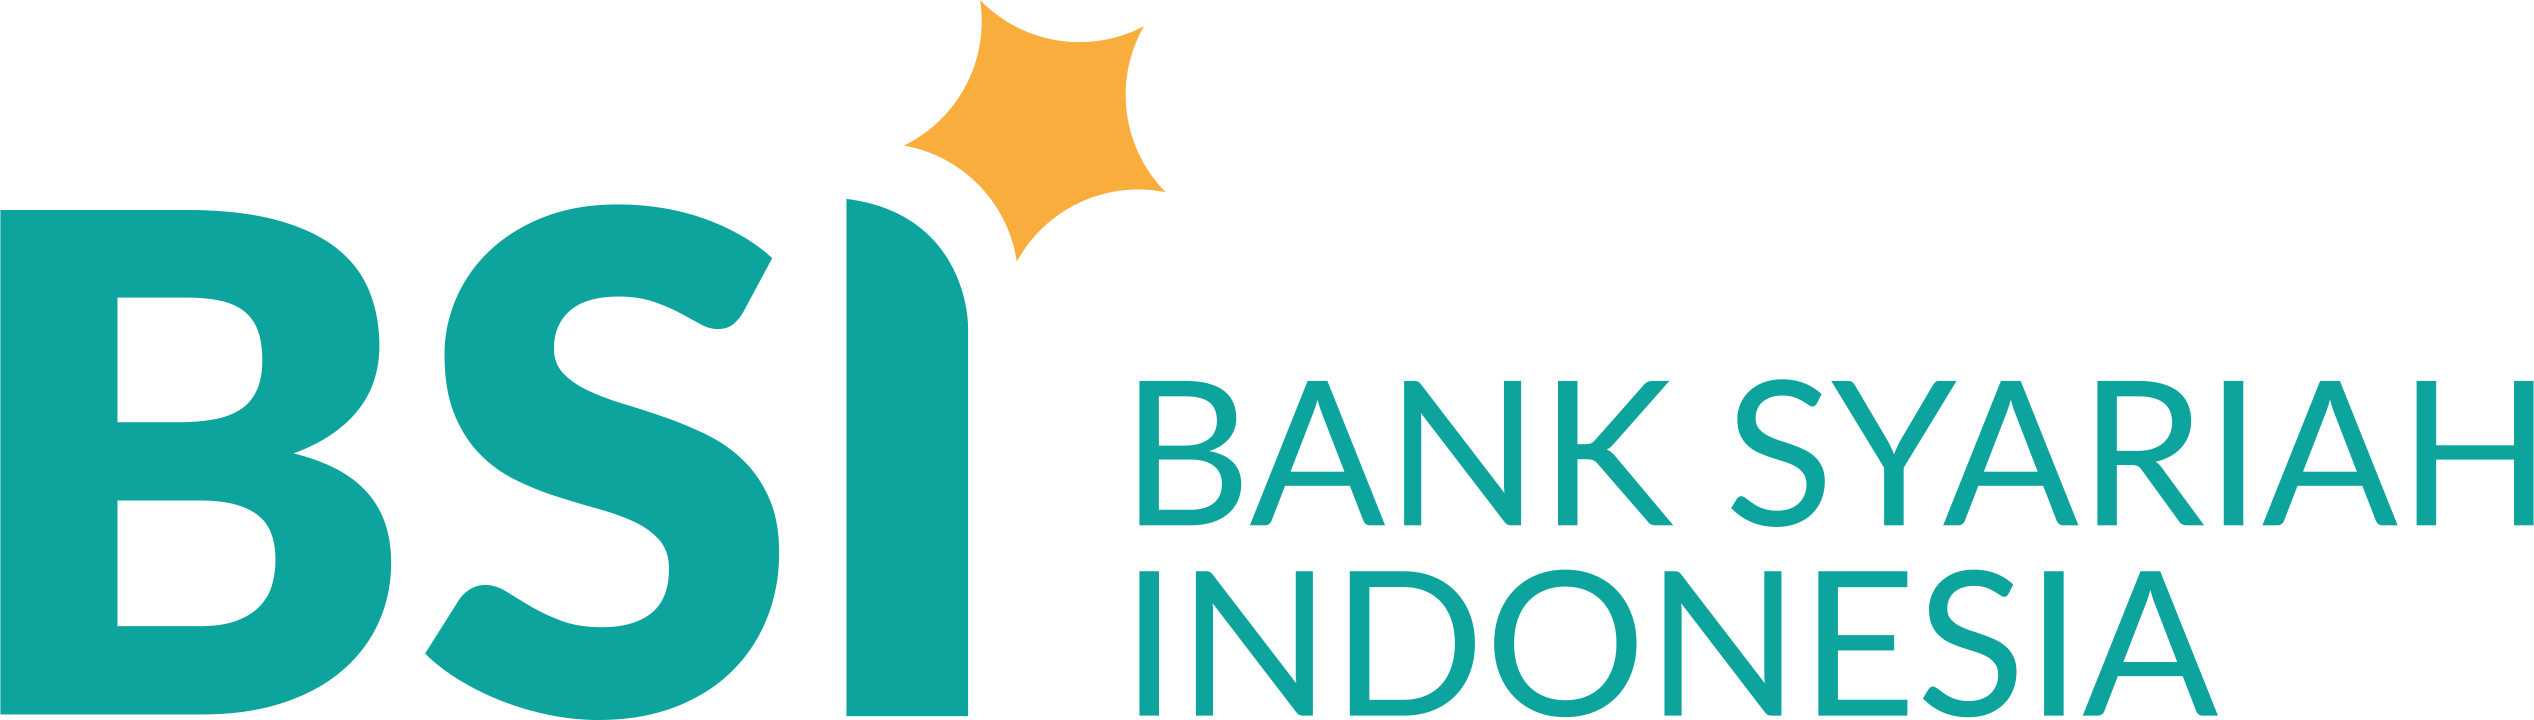 BSI-Bank-Syariah-Indonesia-Logo-PNG720p-Vector69Com-1-1.png